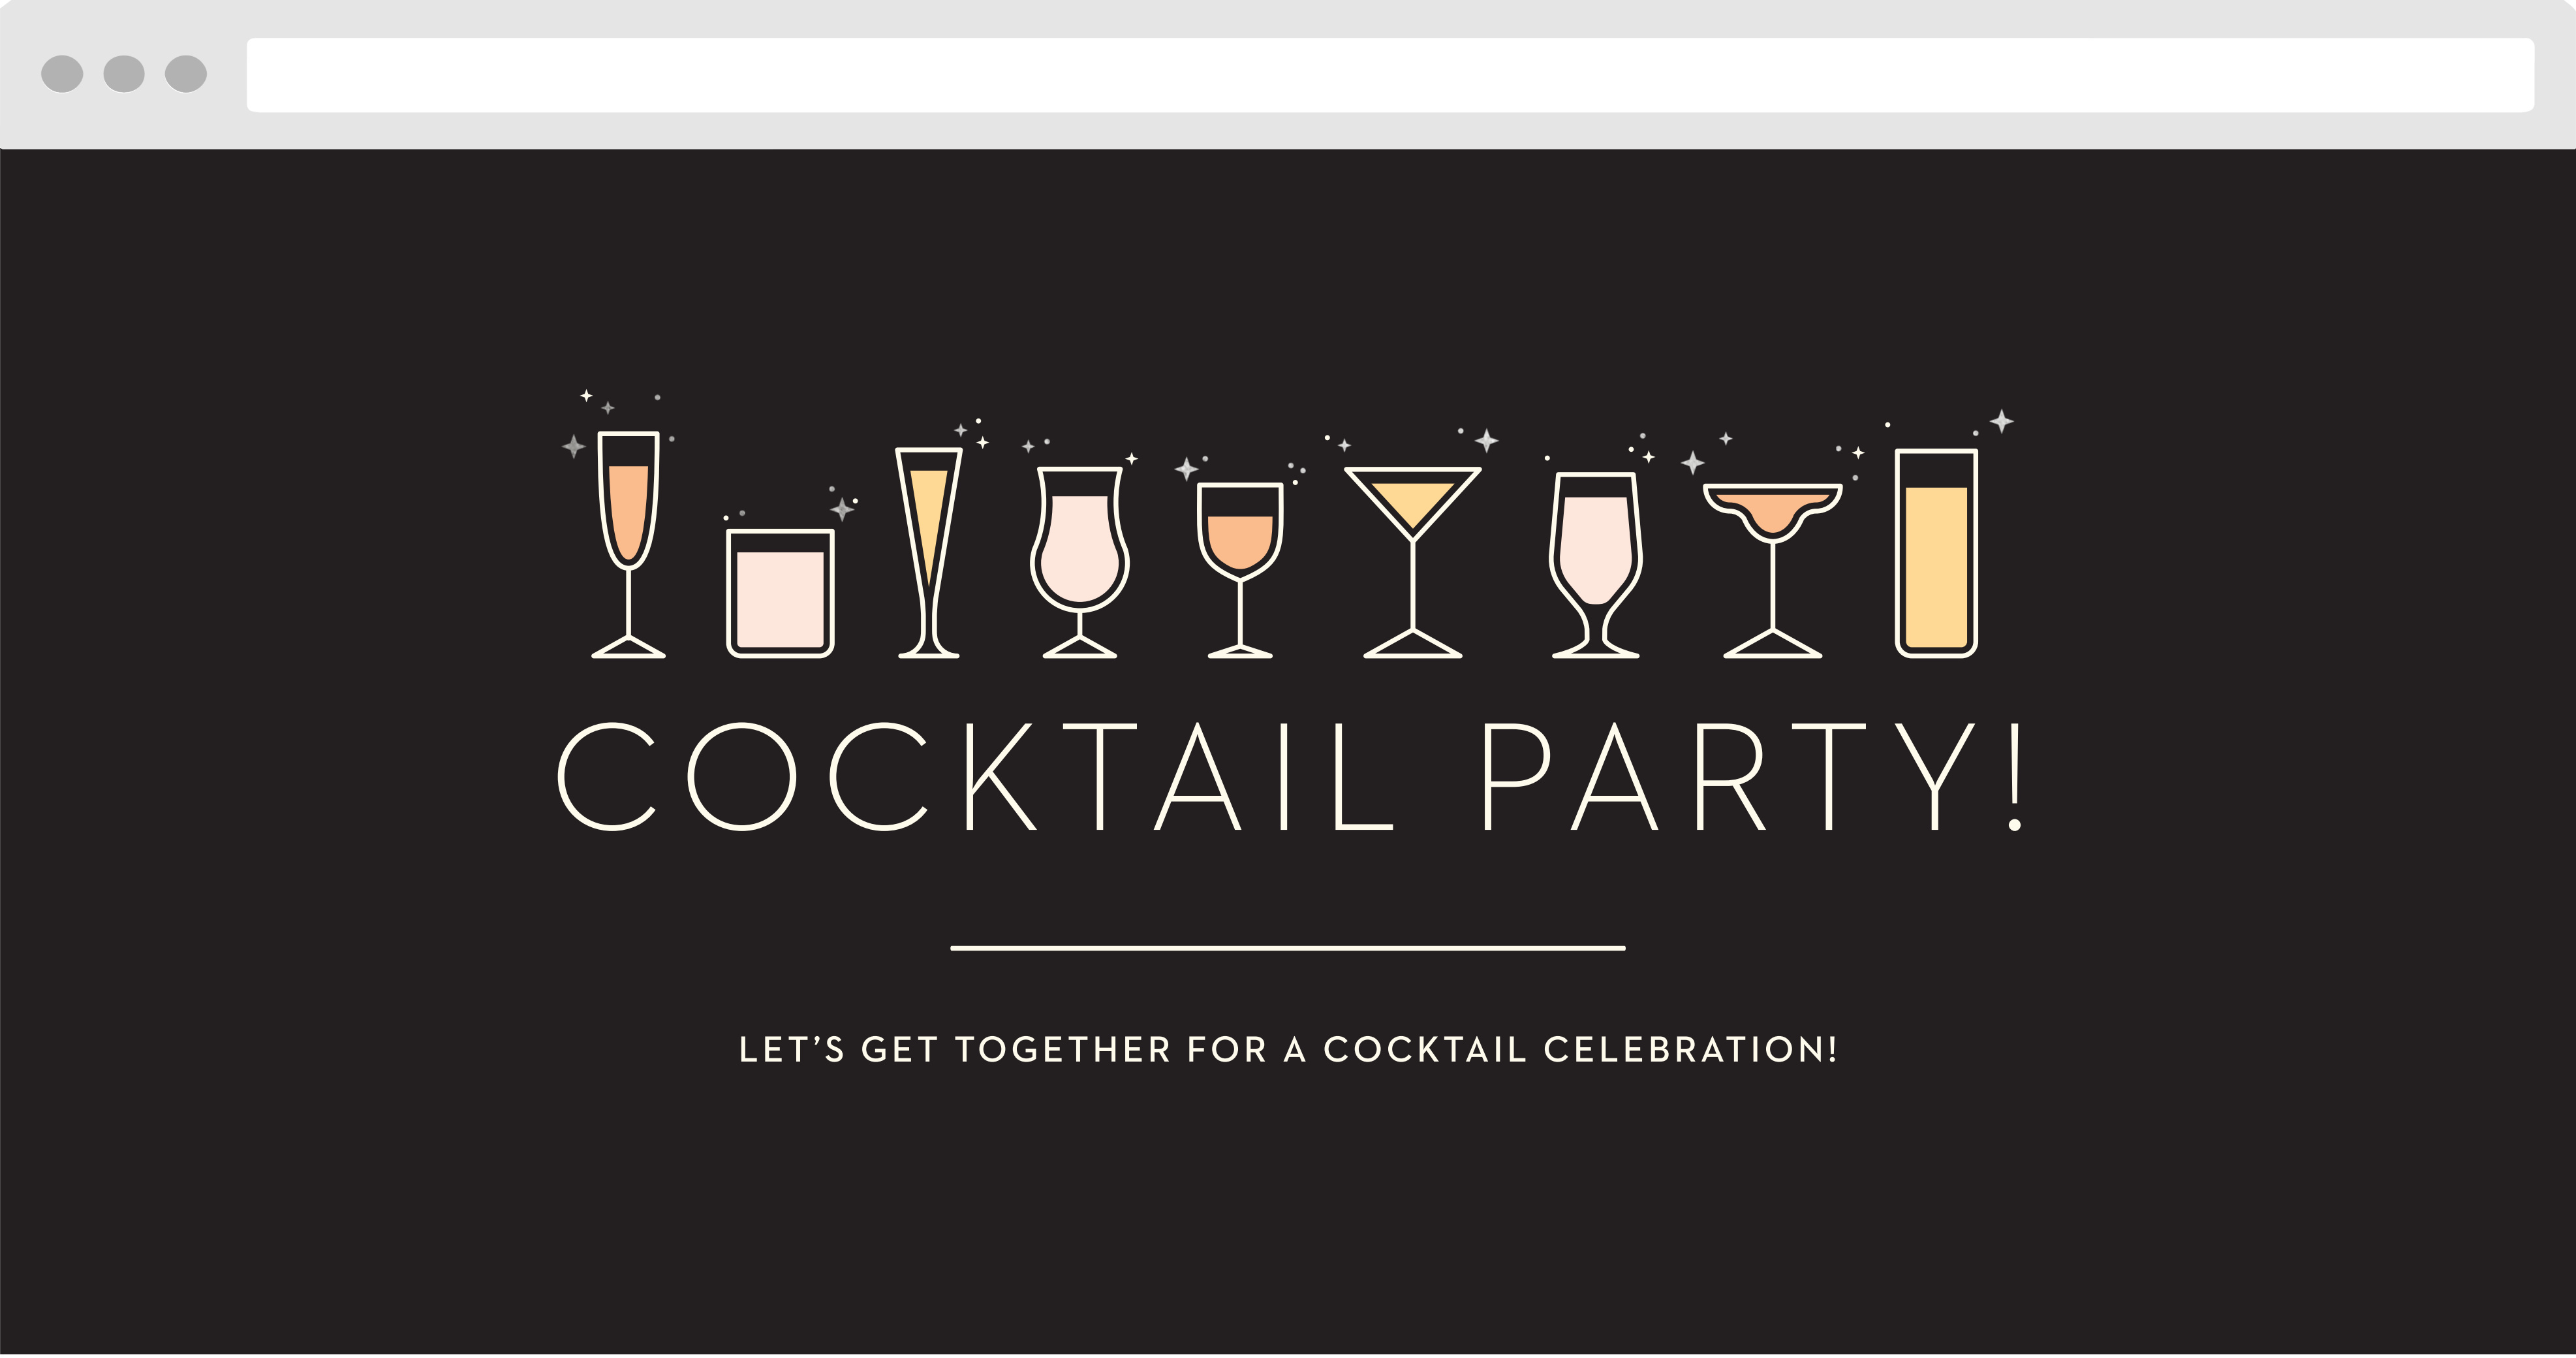 Cute Cocktails Party Website